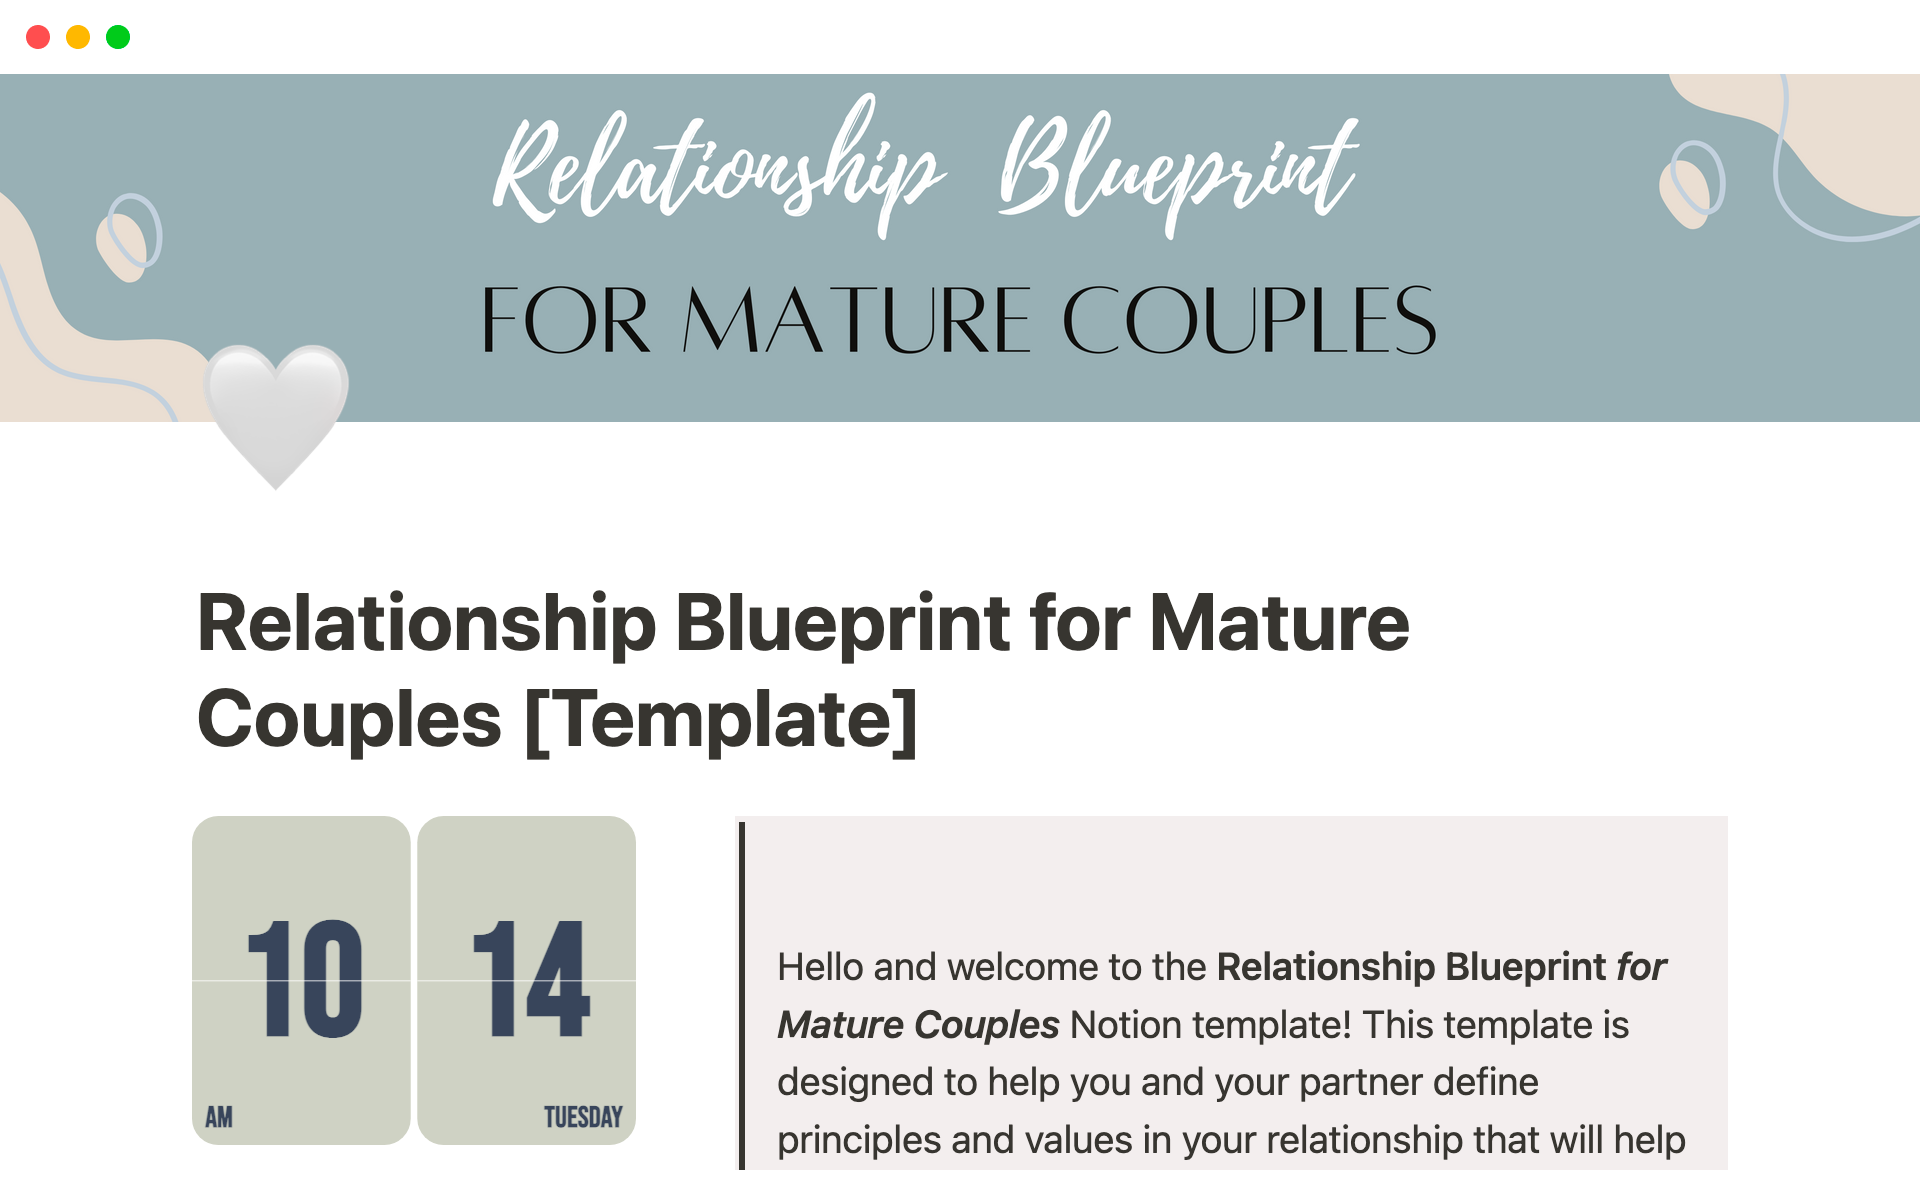 Relationship Blueprint for Mature Couples님의 템플릿 미리보기